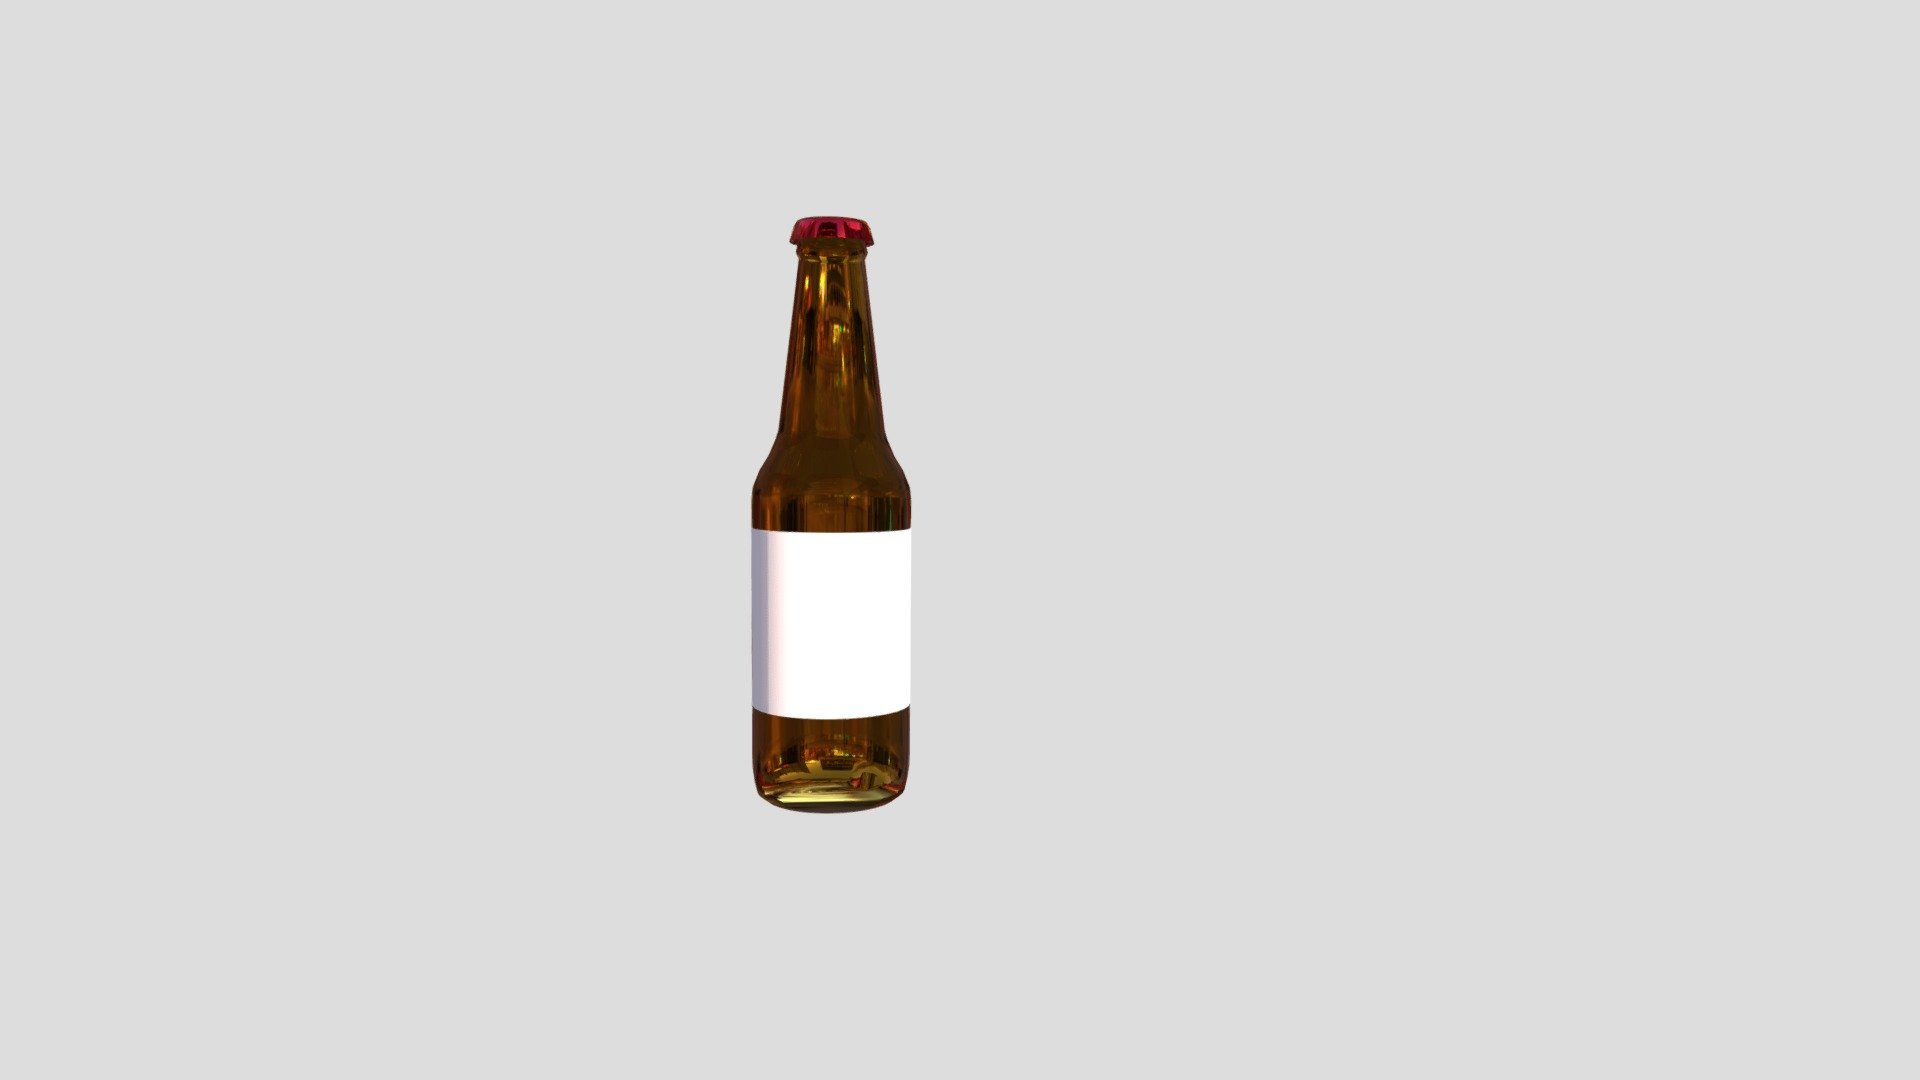 beer bottle with red cap - Beer bottle - Download Free 3D model by Cosmar_one (@earscosmar) 3d model